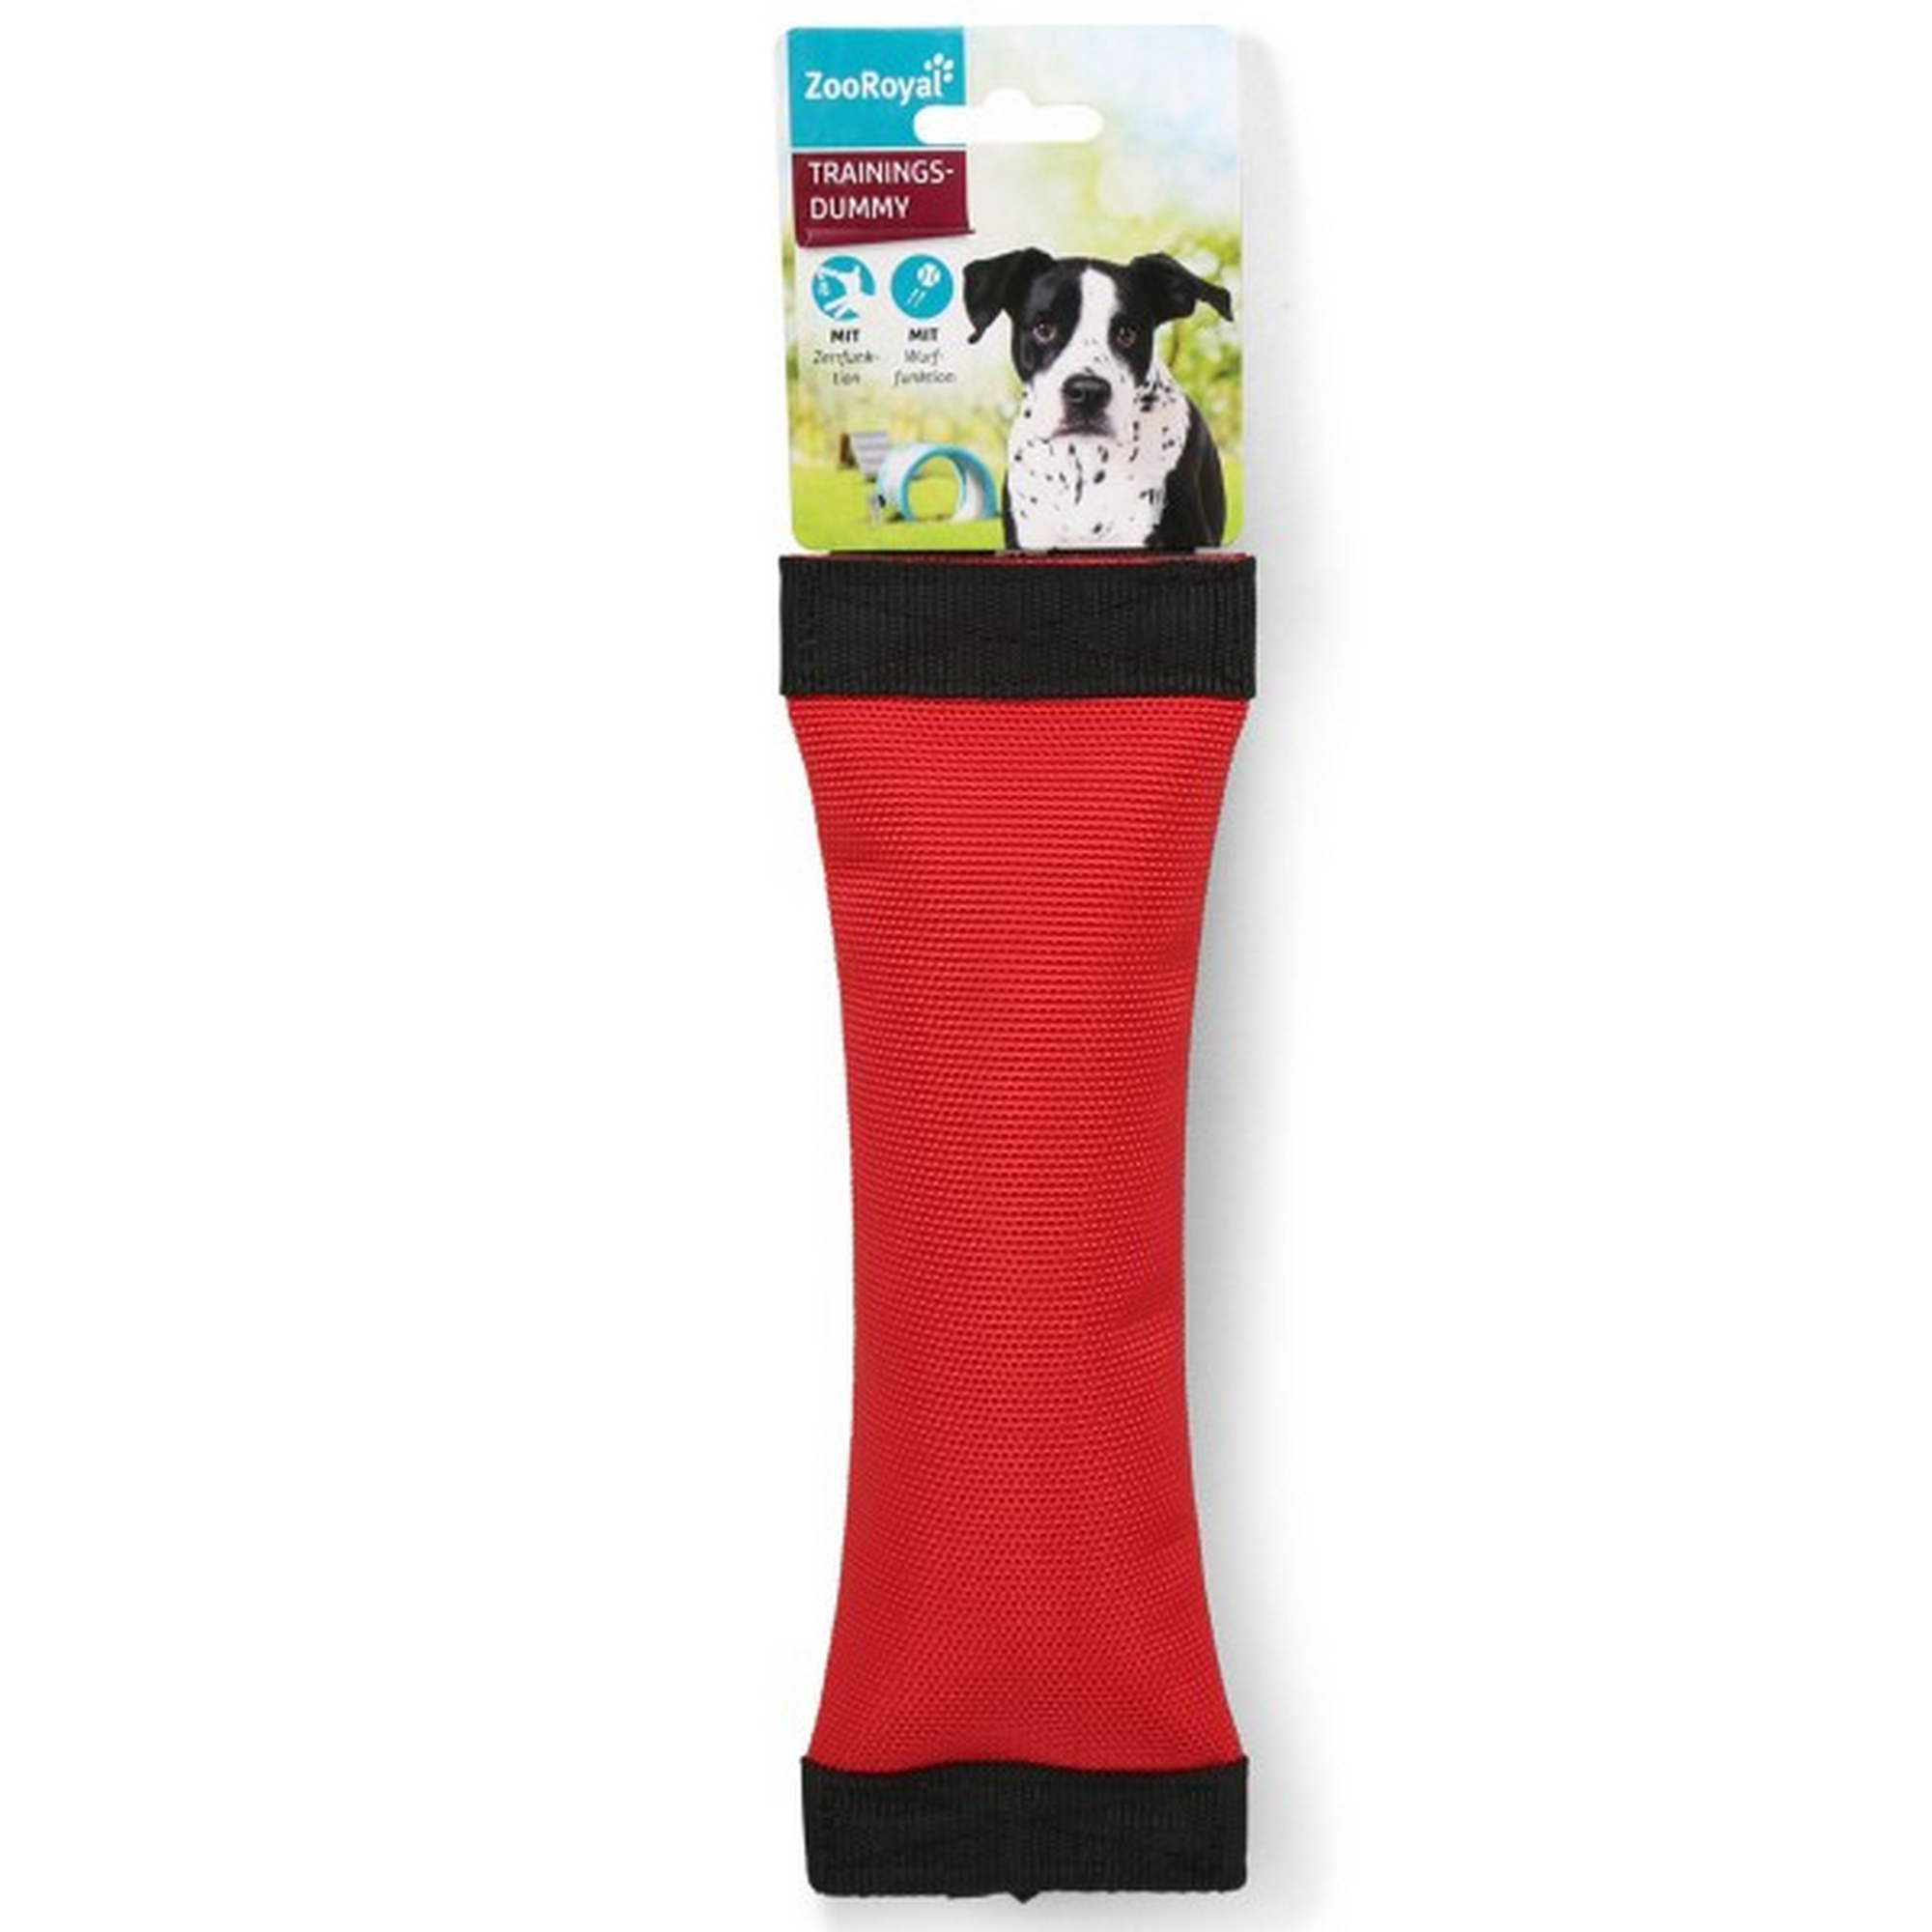 Hunde-Trainingsdummy mit Schlaufe rot/schwarz 60 x 250 mm + product picture